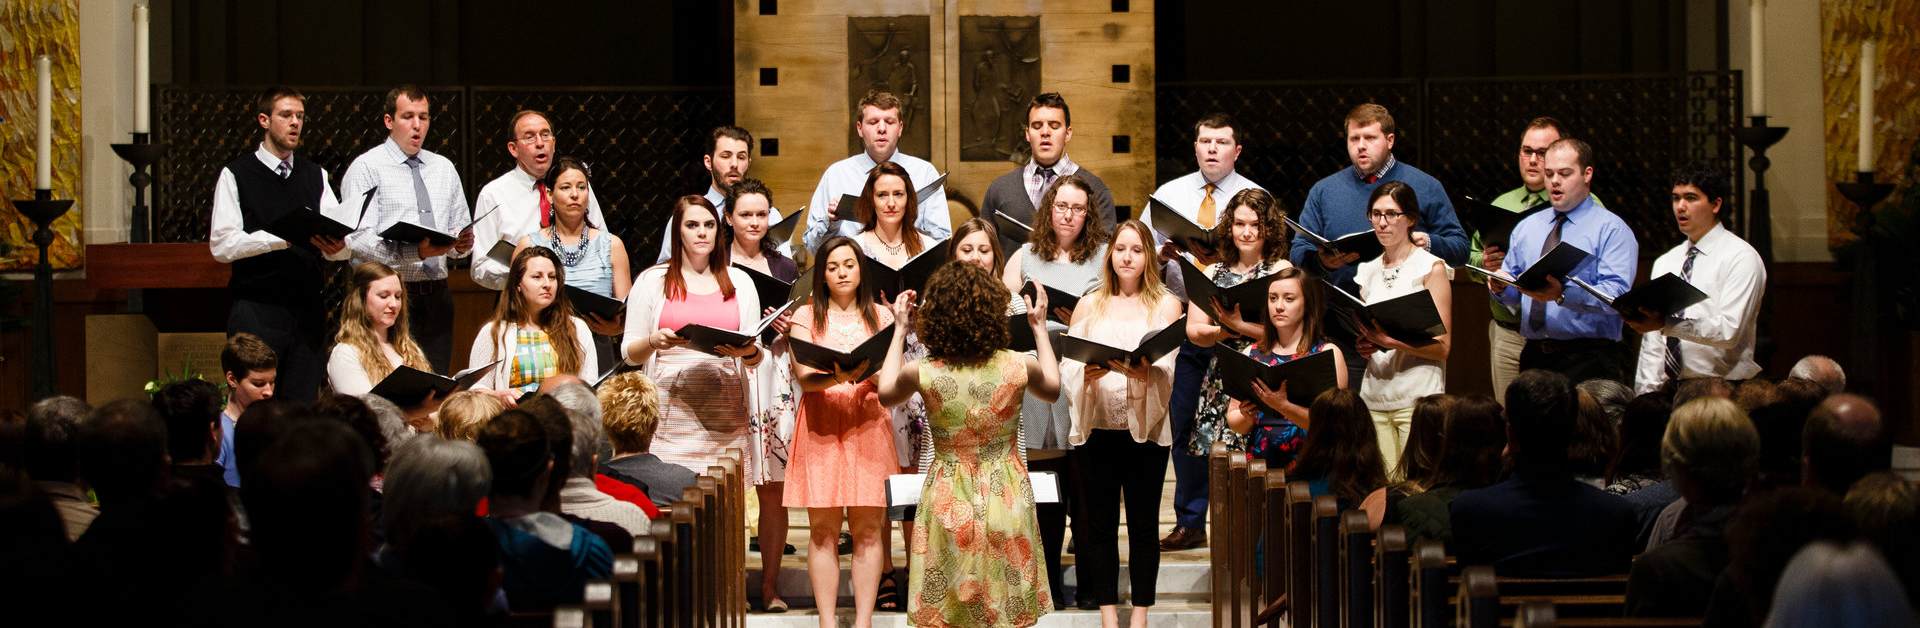 alumni choir performing in the Chapel of St. Thomas Aquinas